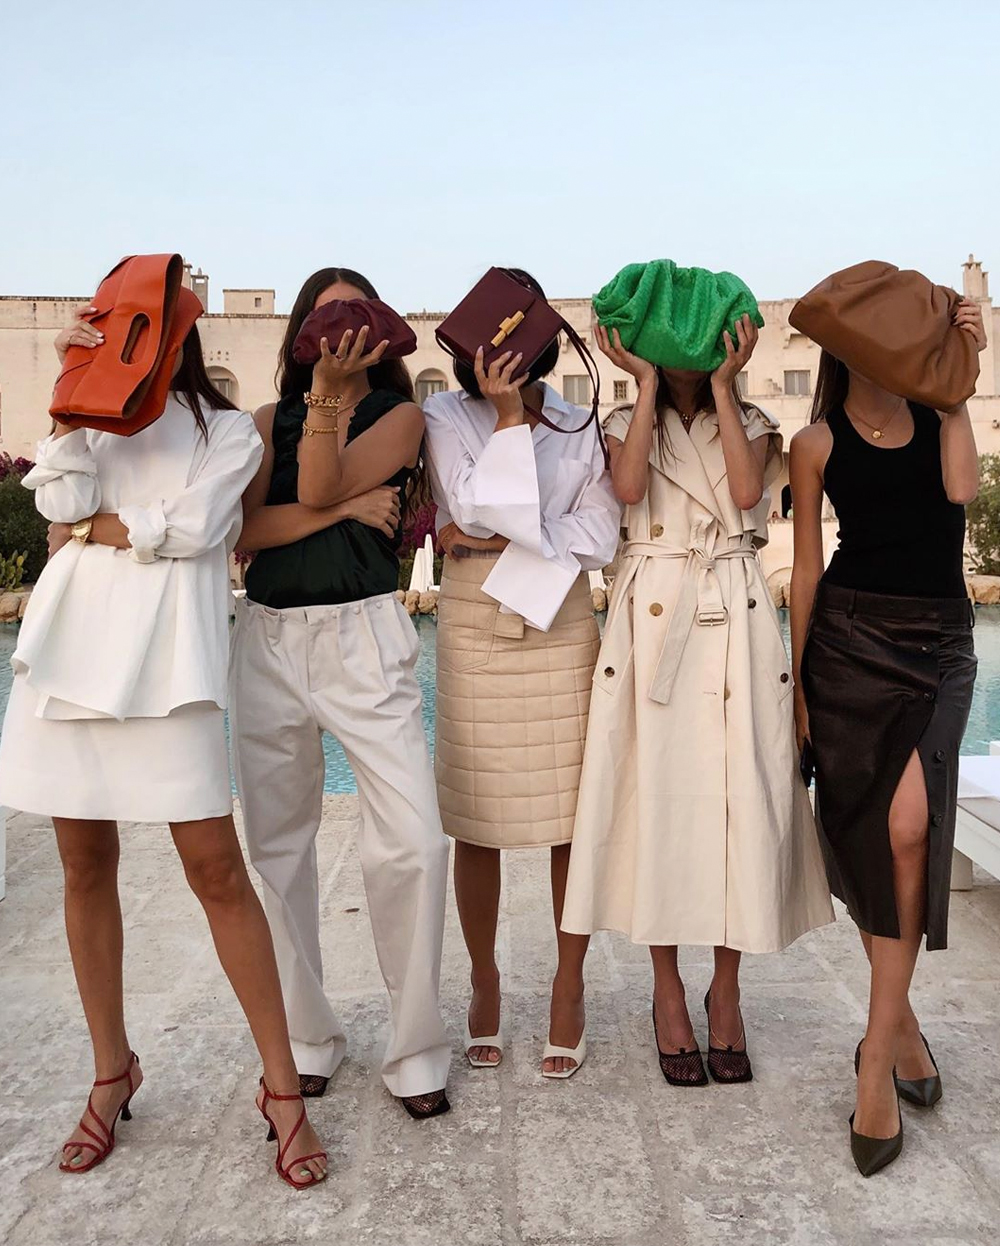 best designer bags 2019: Bottega Veneta's pouch bags, cross-body satchels and totes